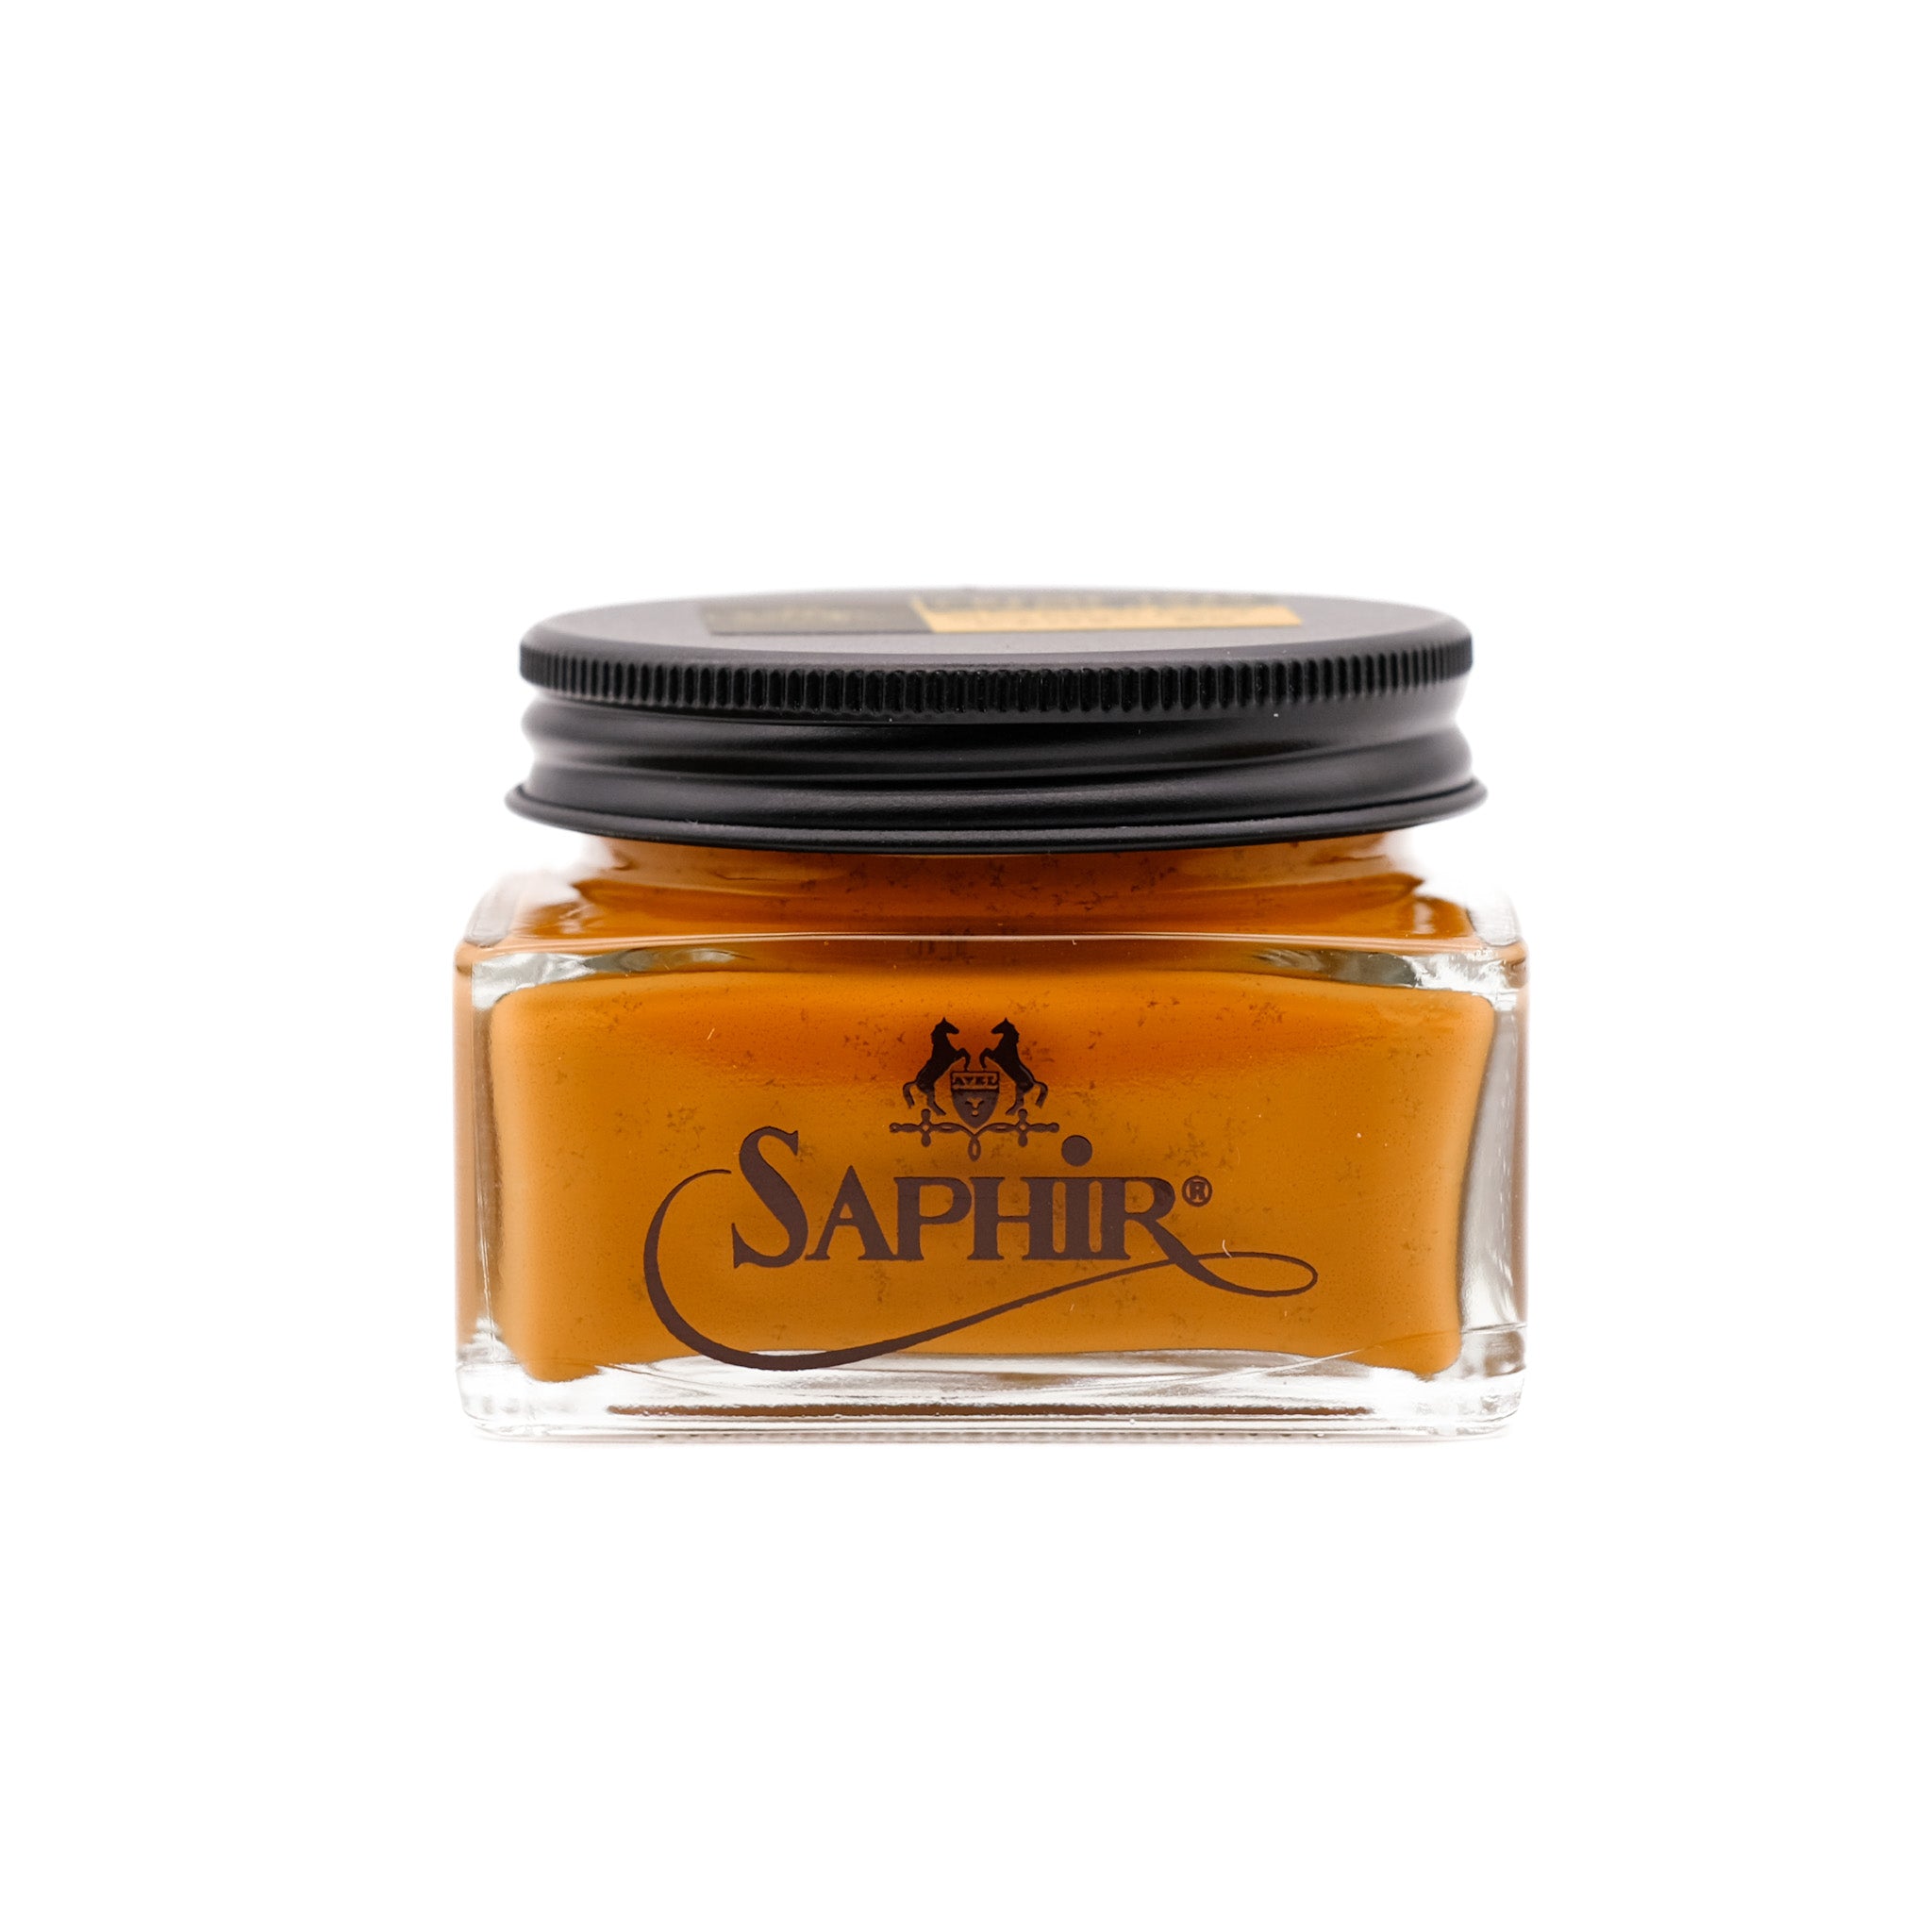 Saphir Pommadier Cream Polish Samples